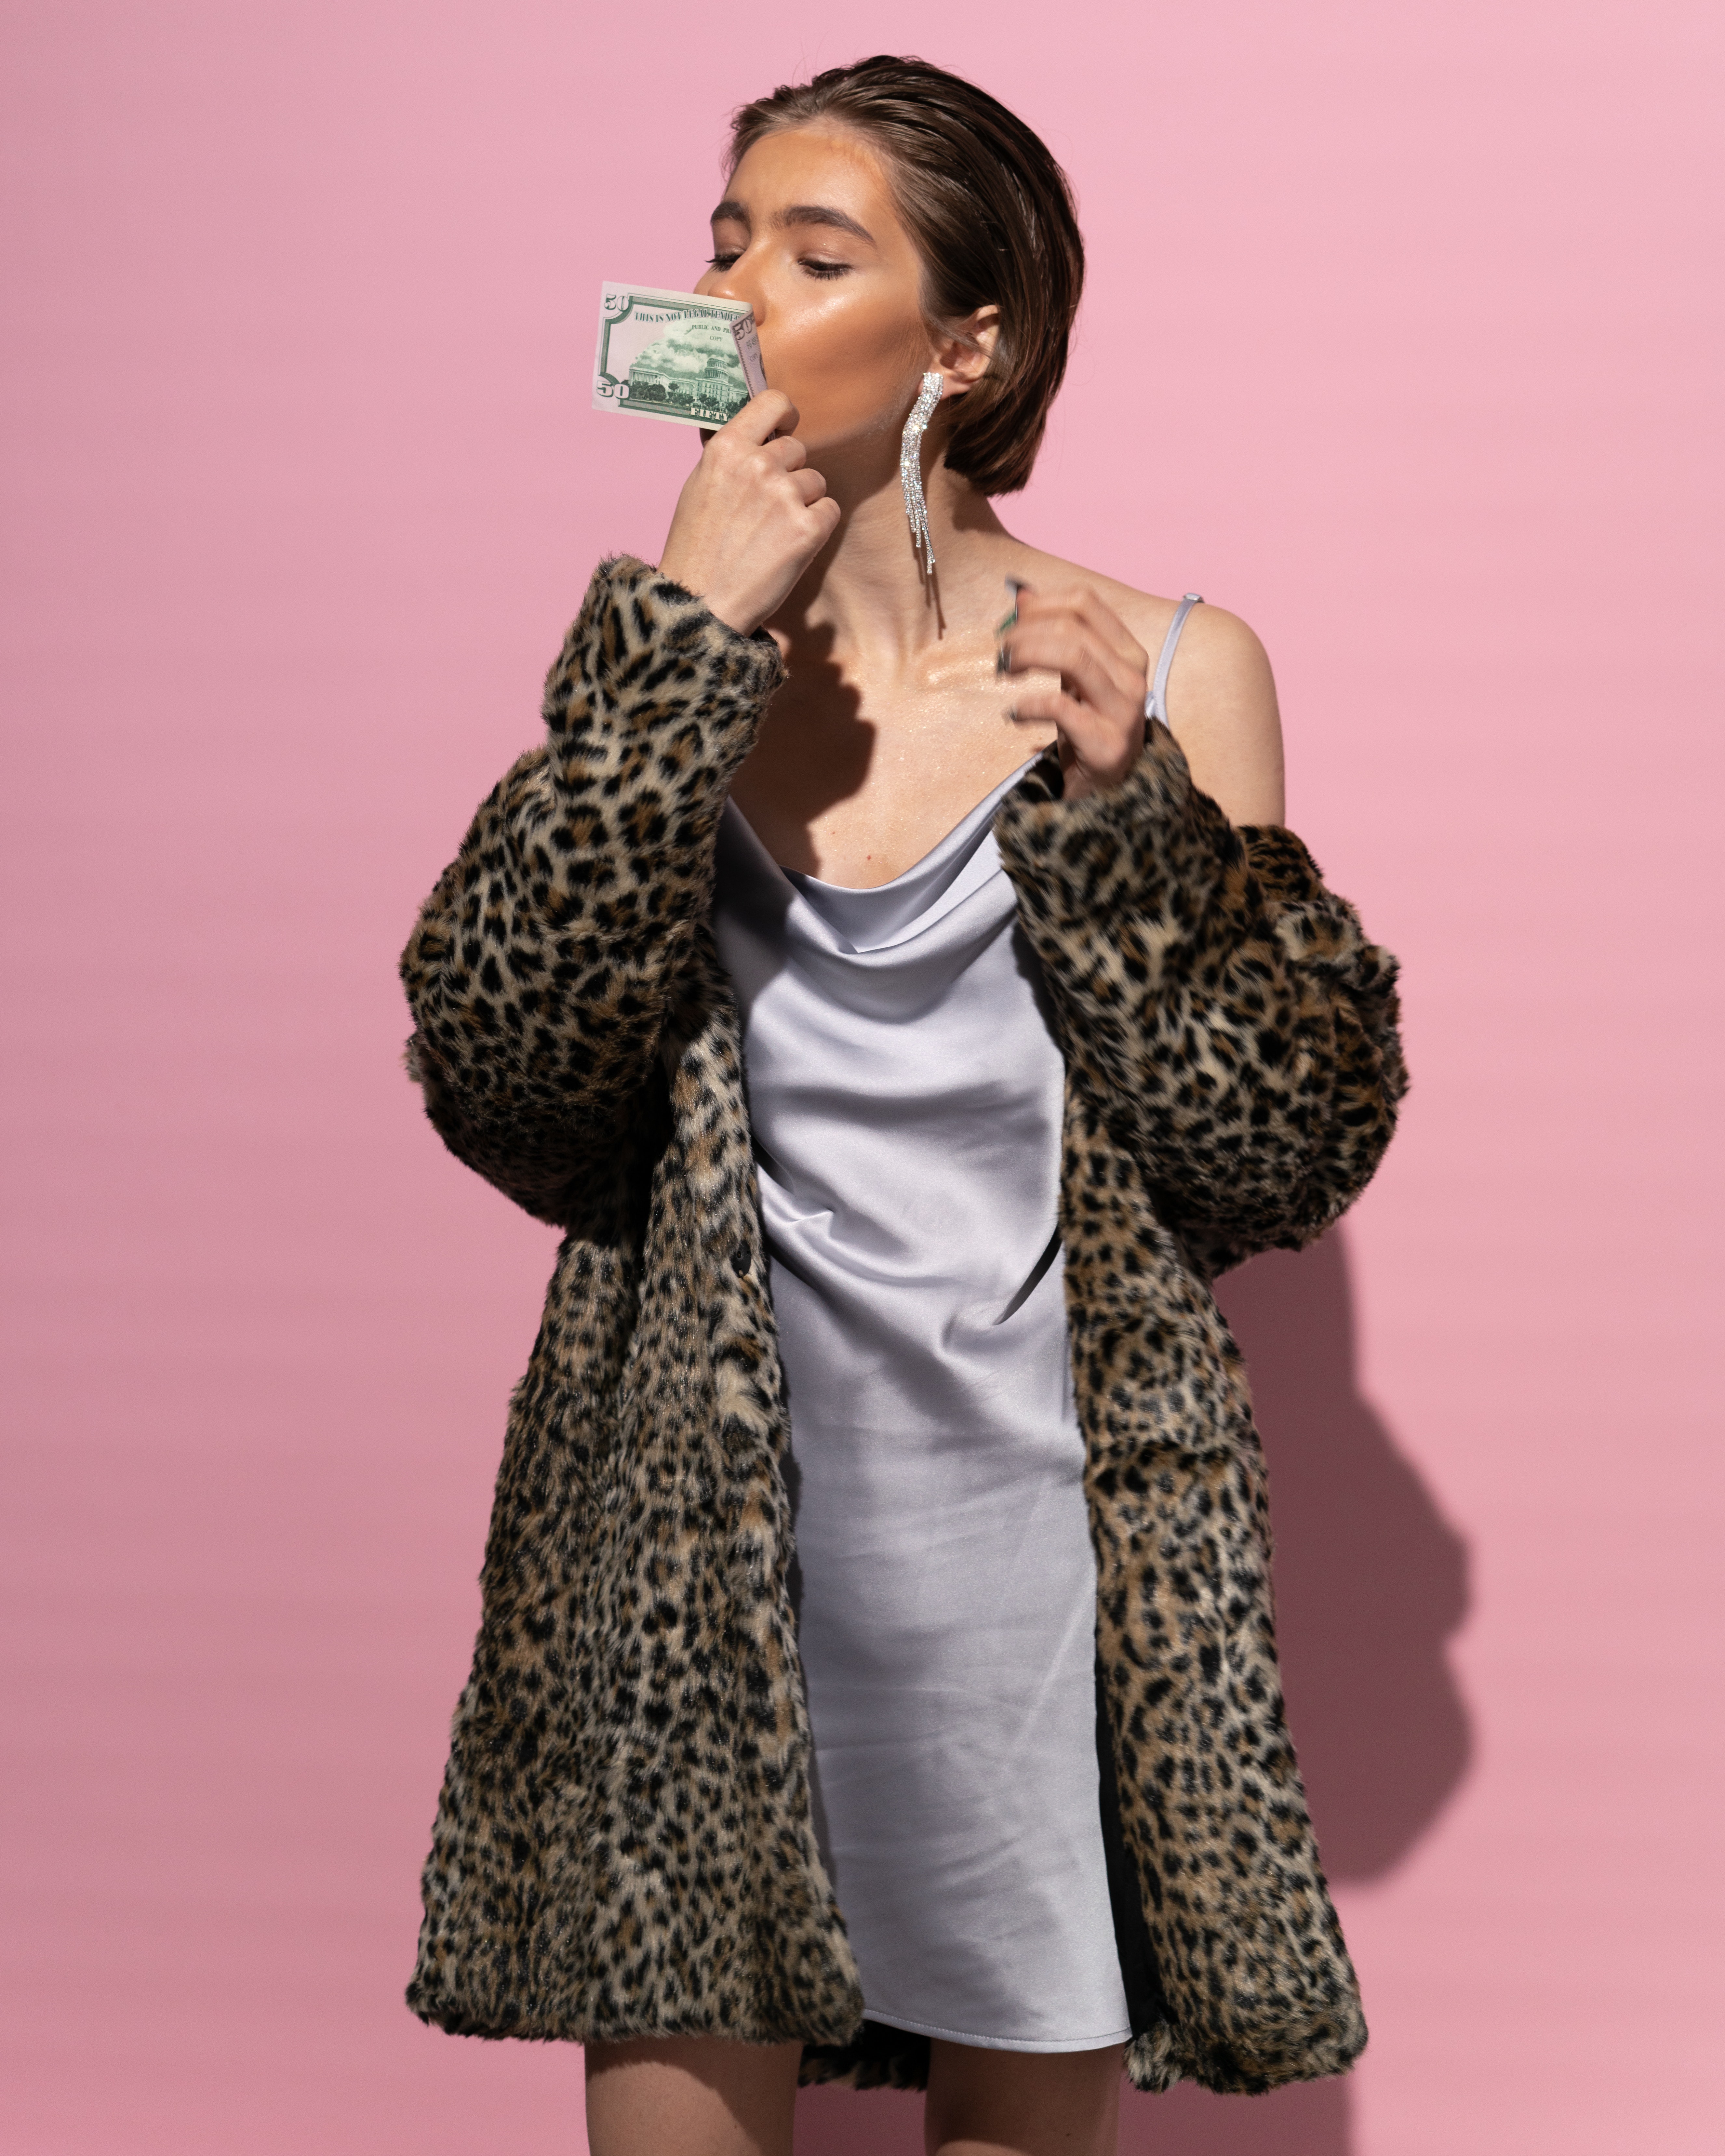 A woman smelling money. | Source: Pexels